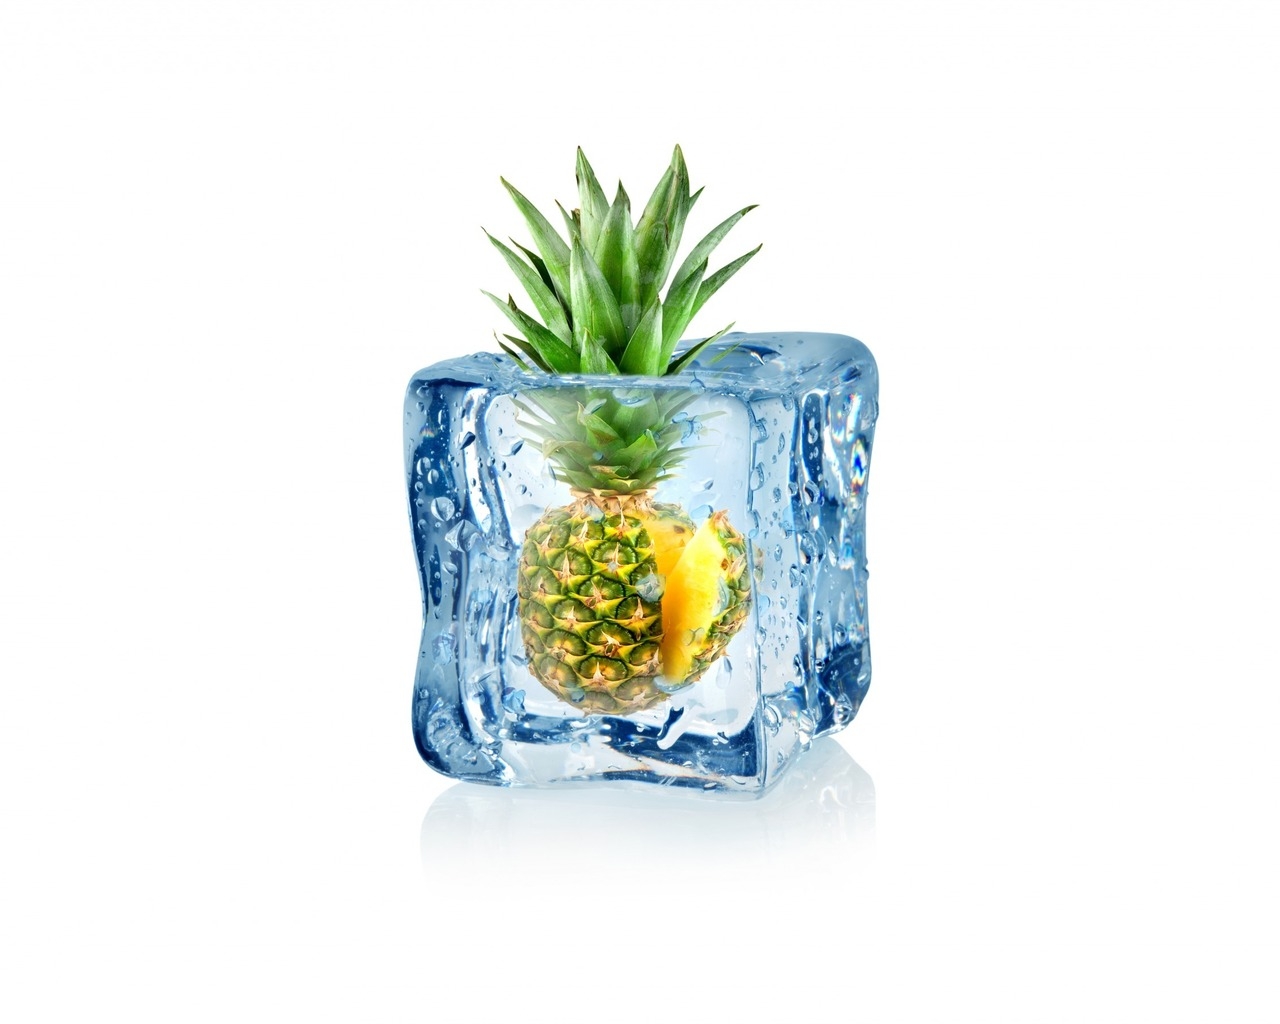 Frozen Pineapple for 1280 x 1024 resolution